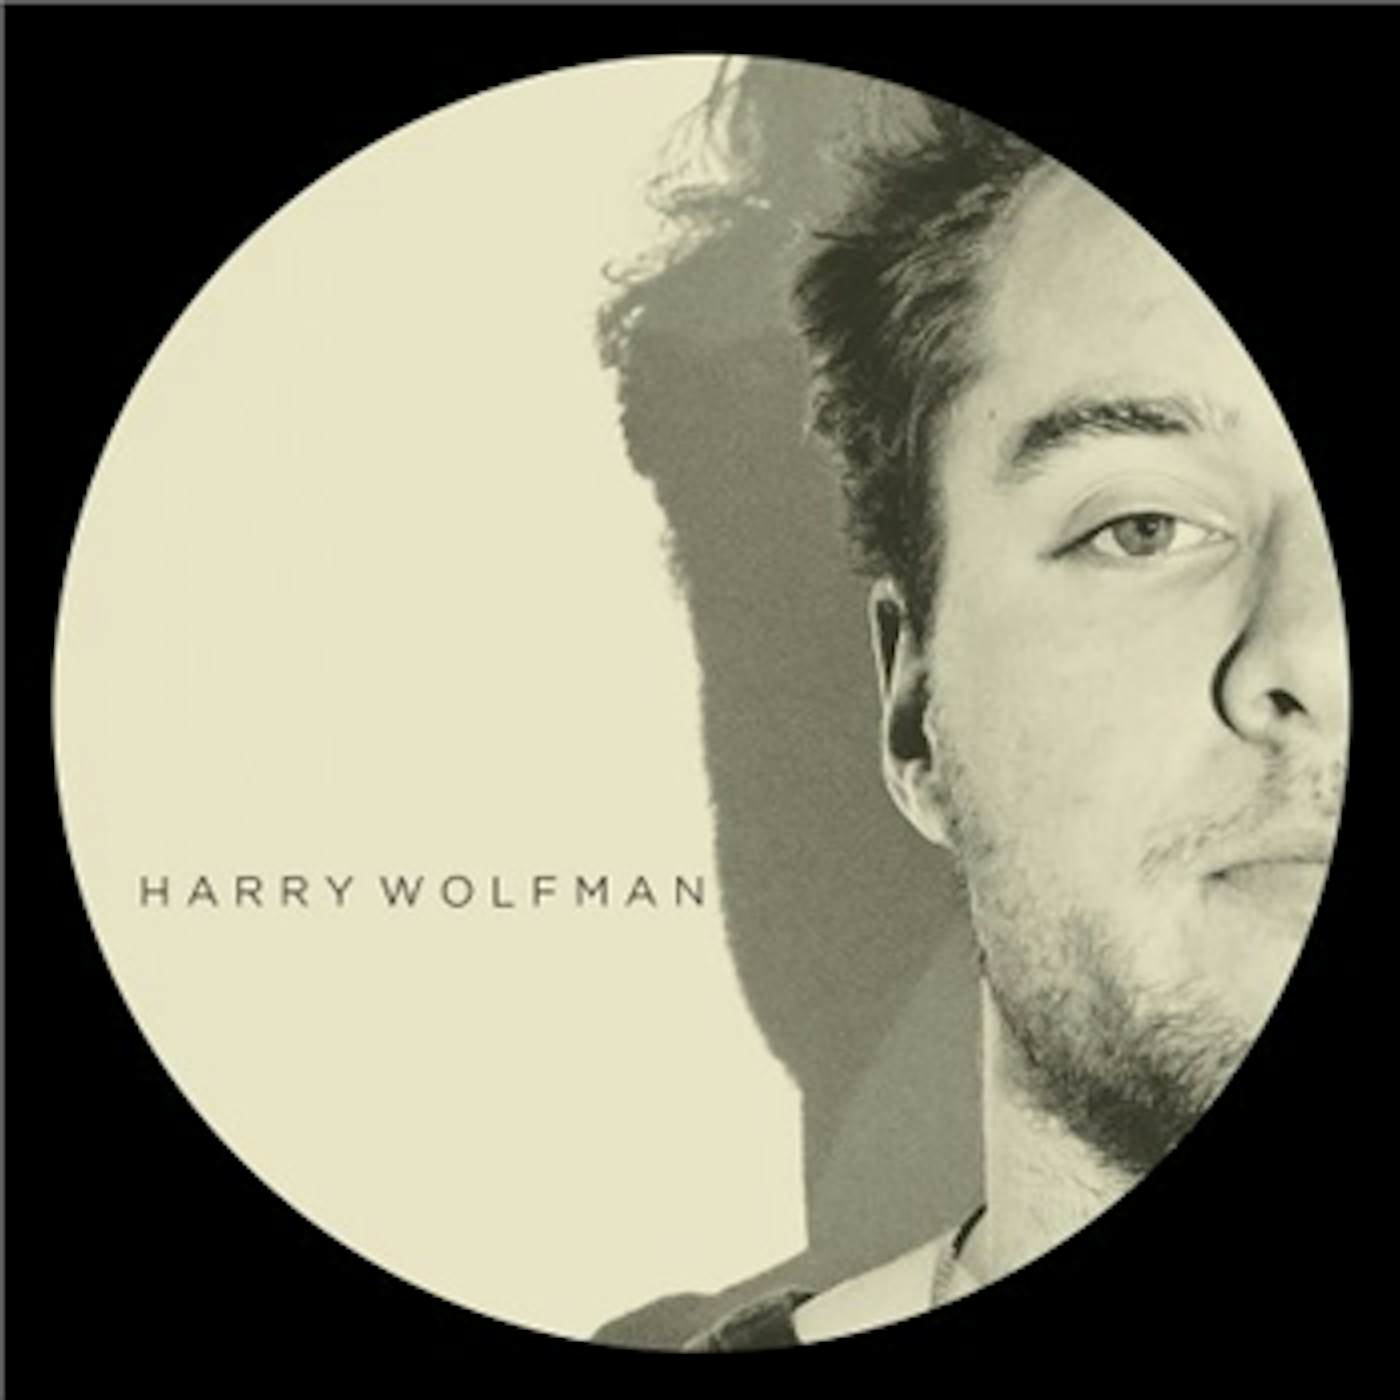 Harry Wolfman ALWAYS 3 Vinyl Record